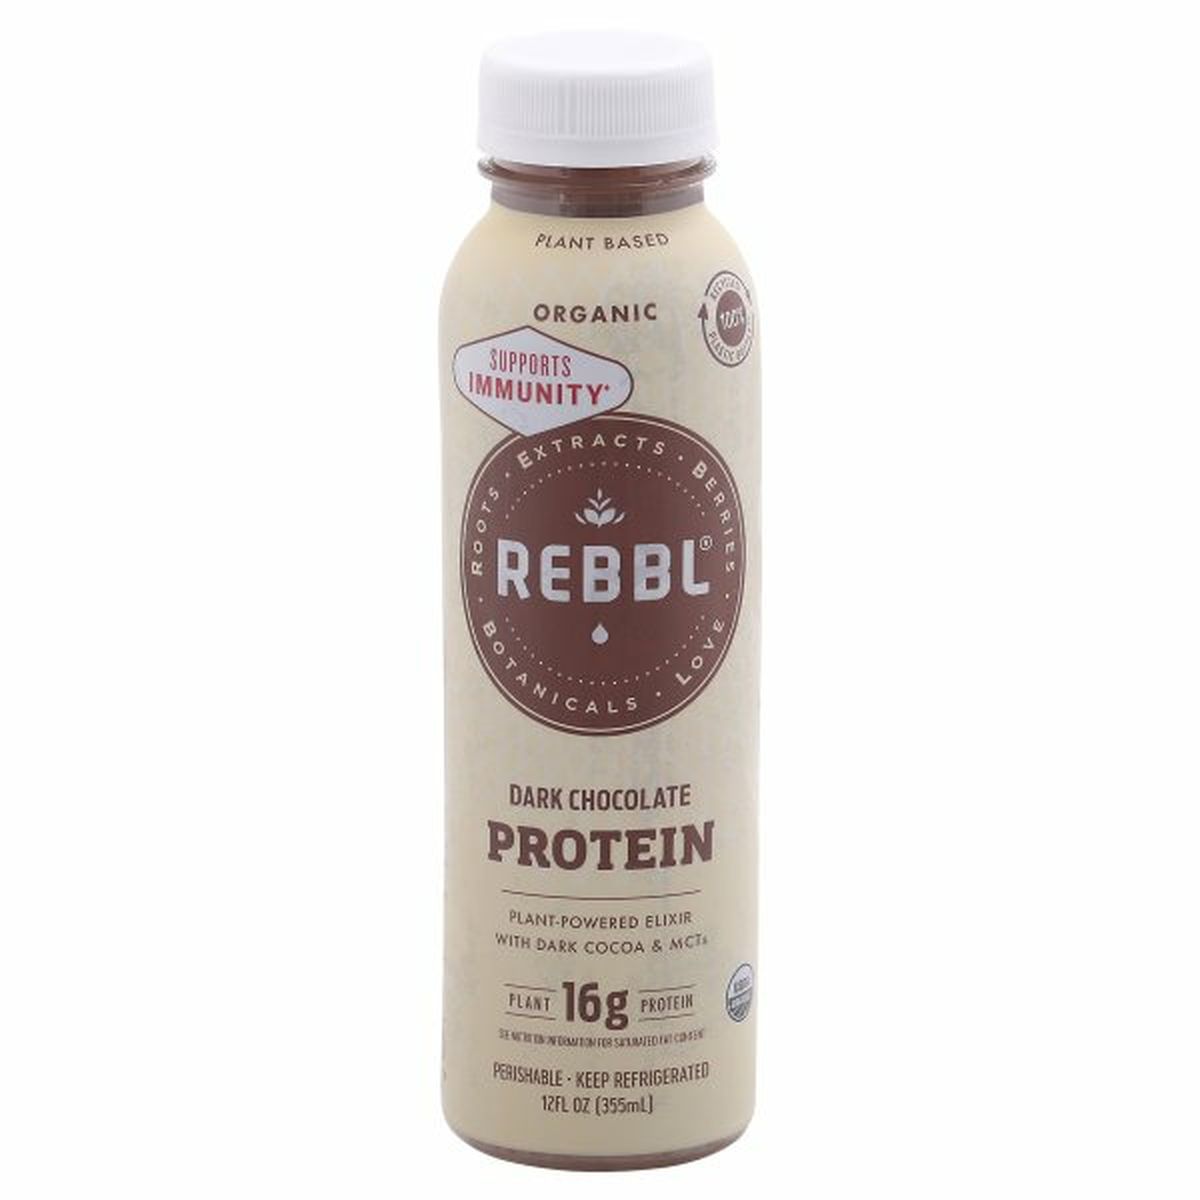 Calories in REBBL Plant- Powered Elixir, Organic, Dark Chocolate, Protein